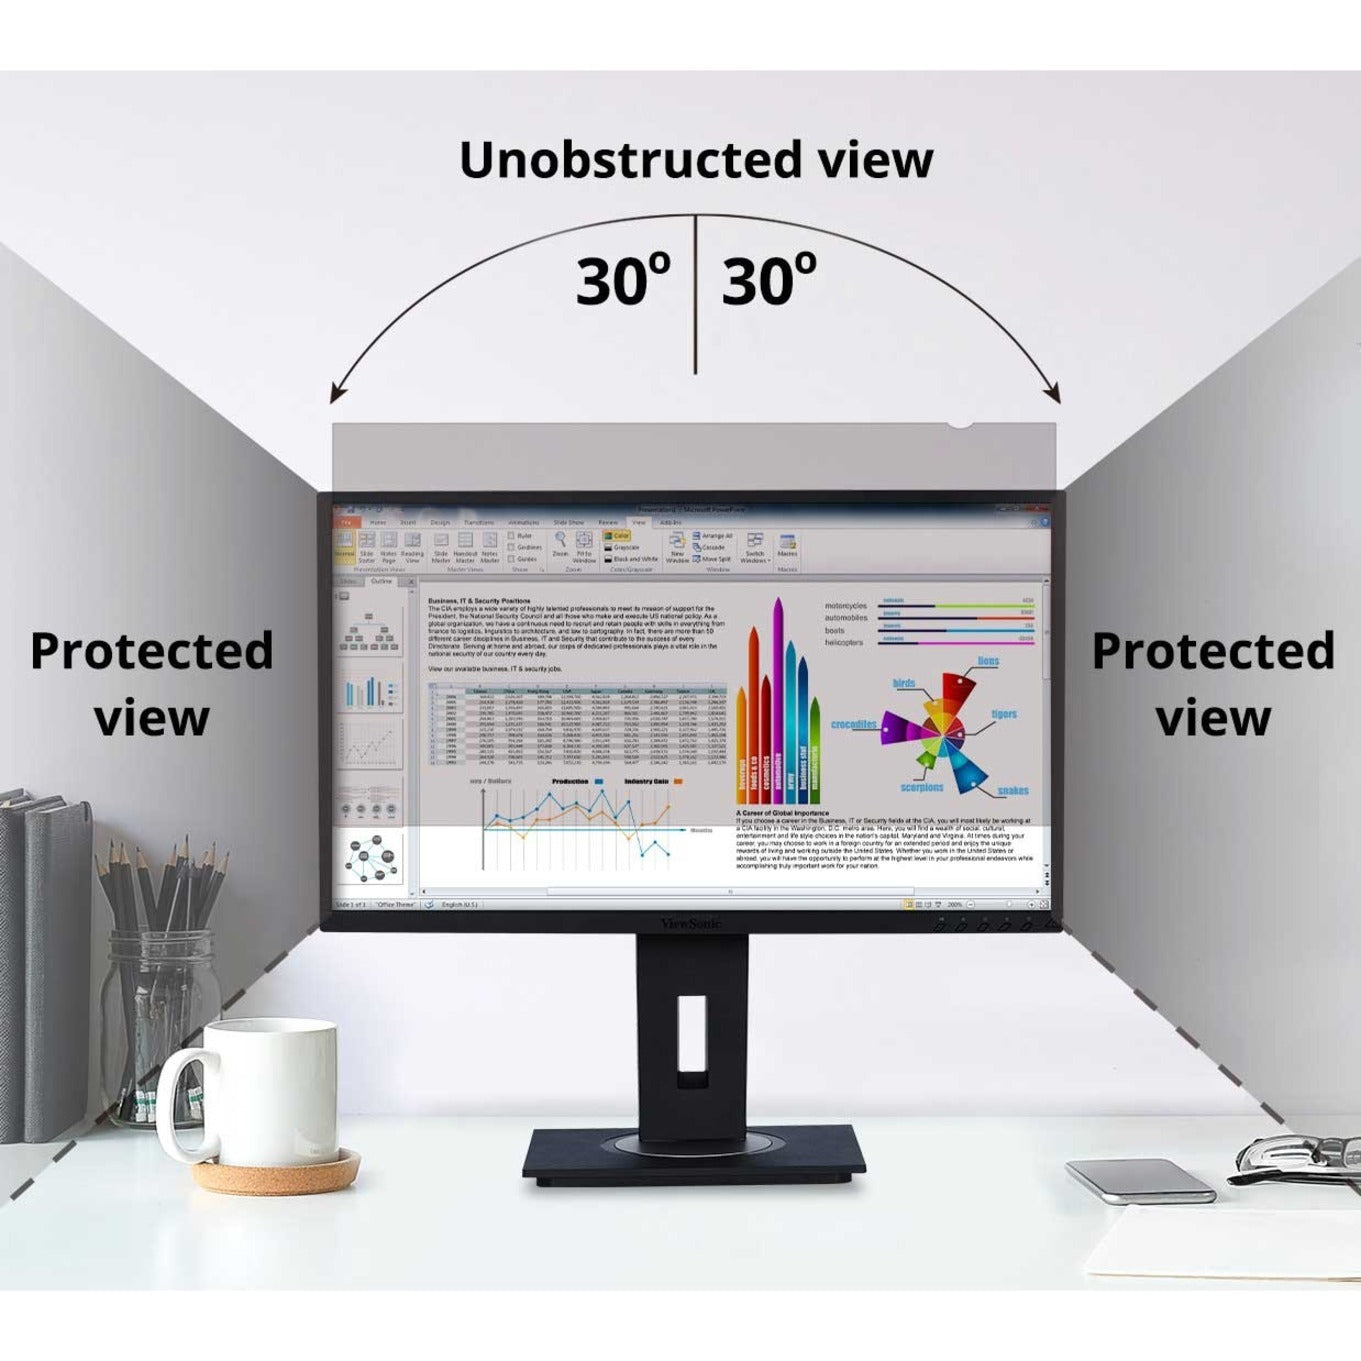 ViewSonic Privacy Filter Screen Protector Black (VSPF2380)